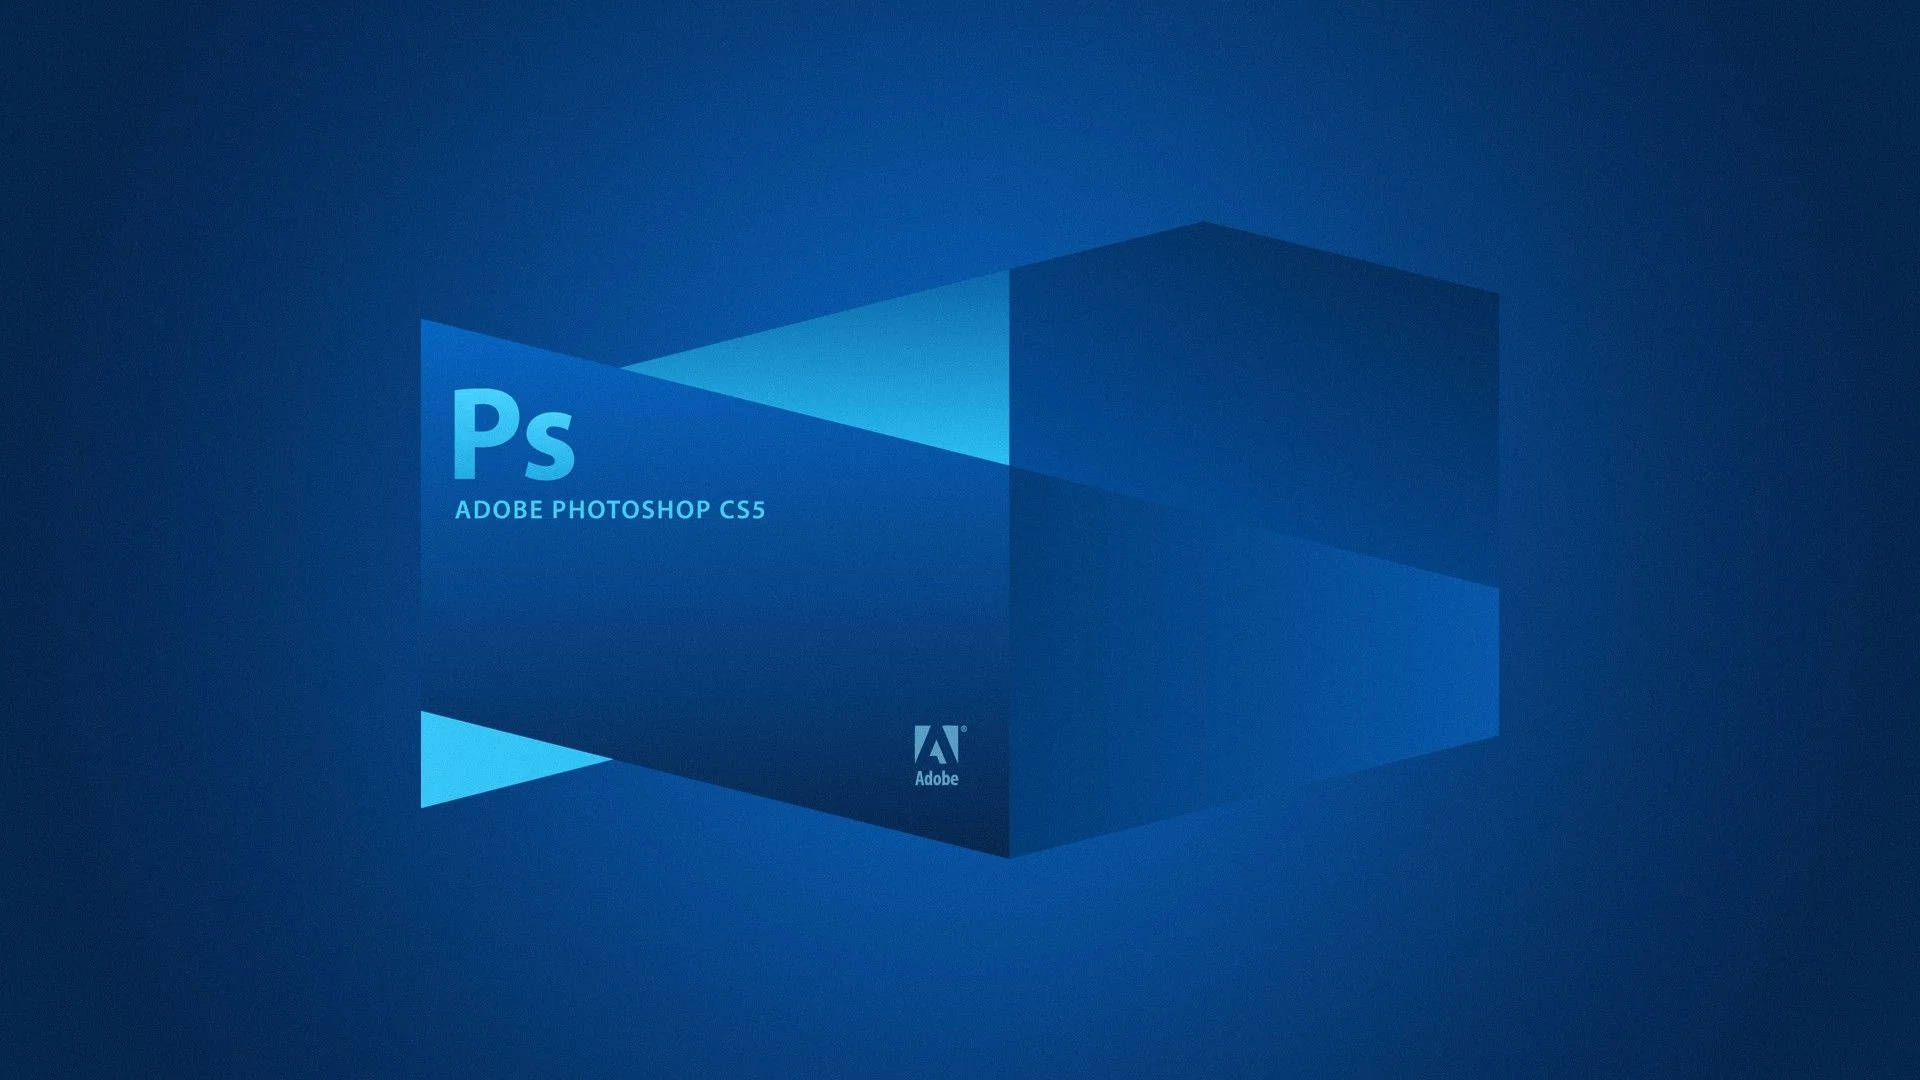 Cross Adobe Photoshop Icon Wallpaper